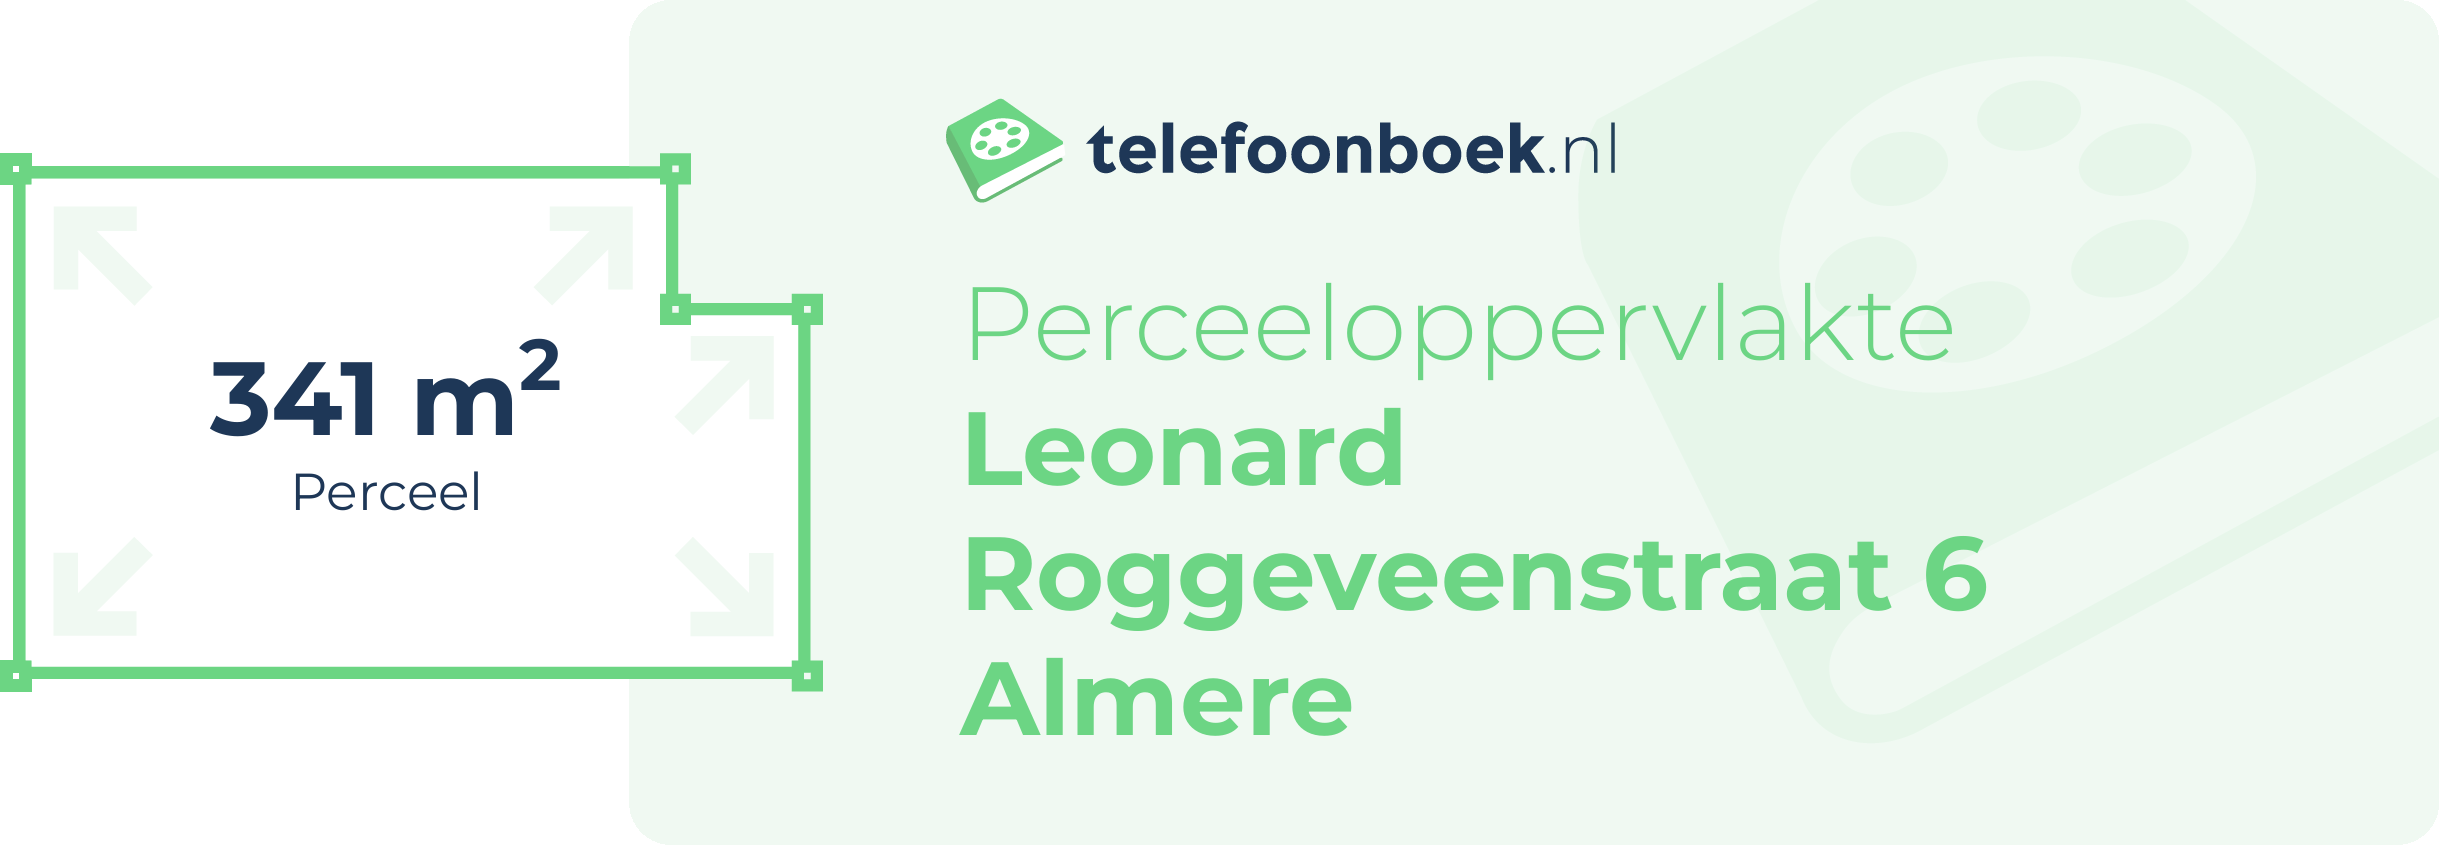 Perceeloppervlakte Leonard Roggeveenstraat 6 Almere